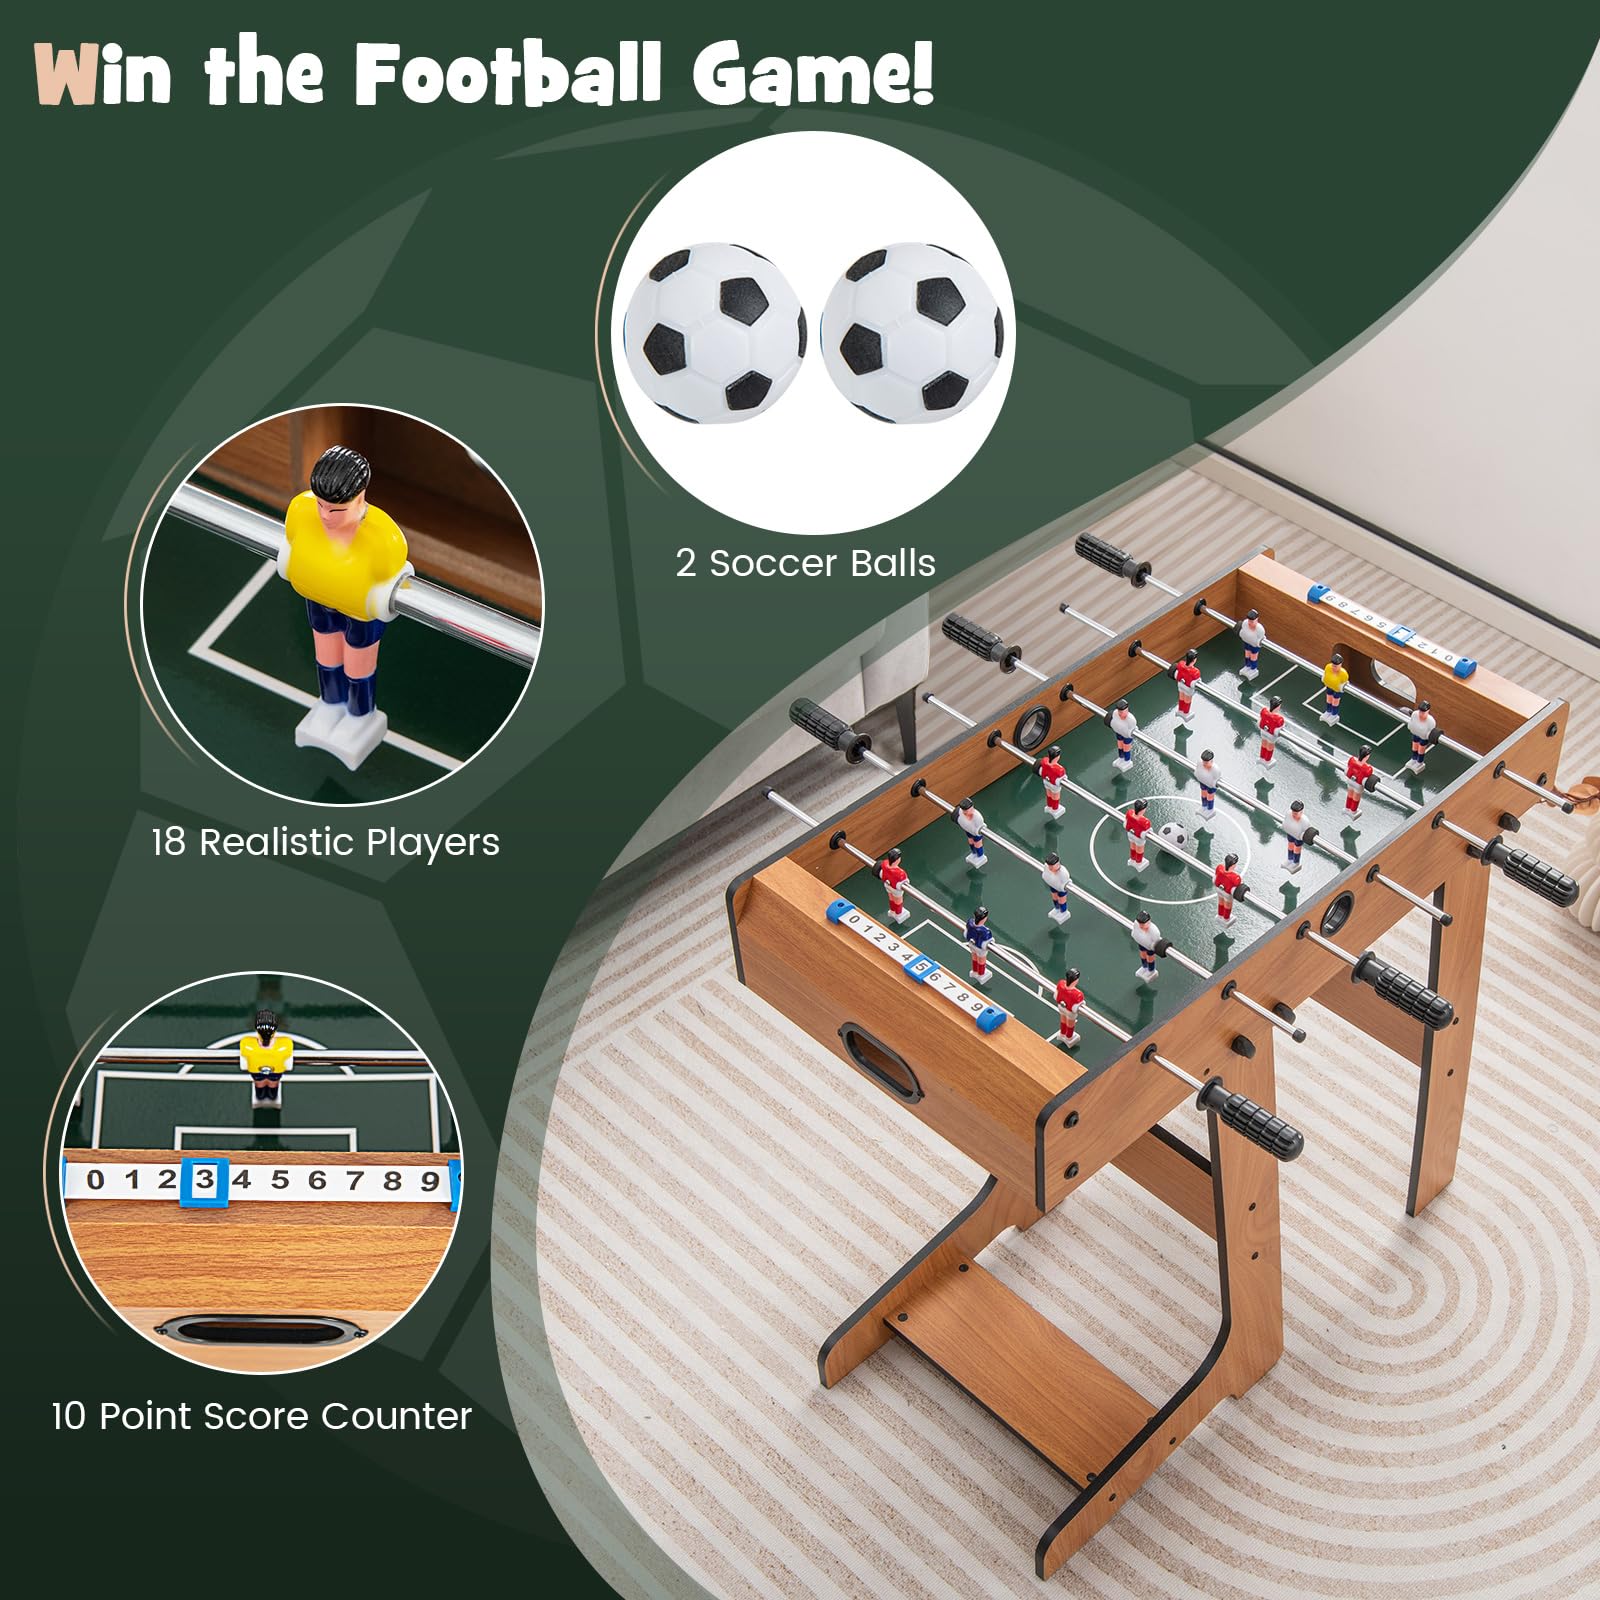 Giantex Folding Foosball Table, Space Saving Arcade Table Soccer with Durable Handle